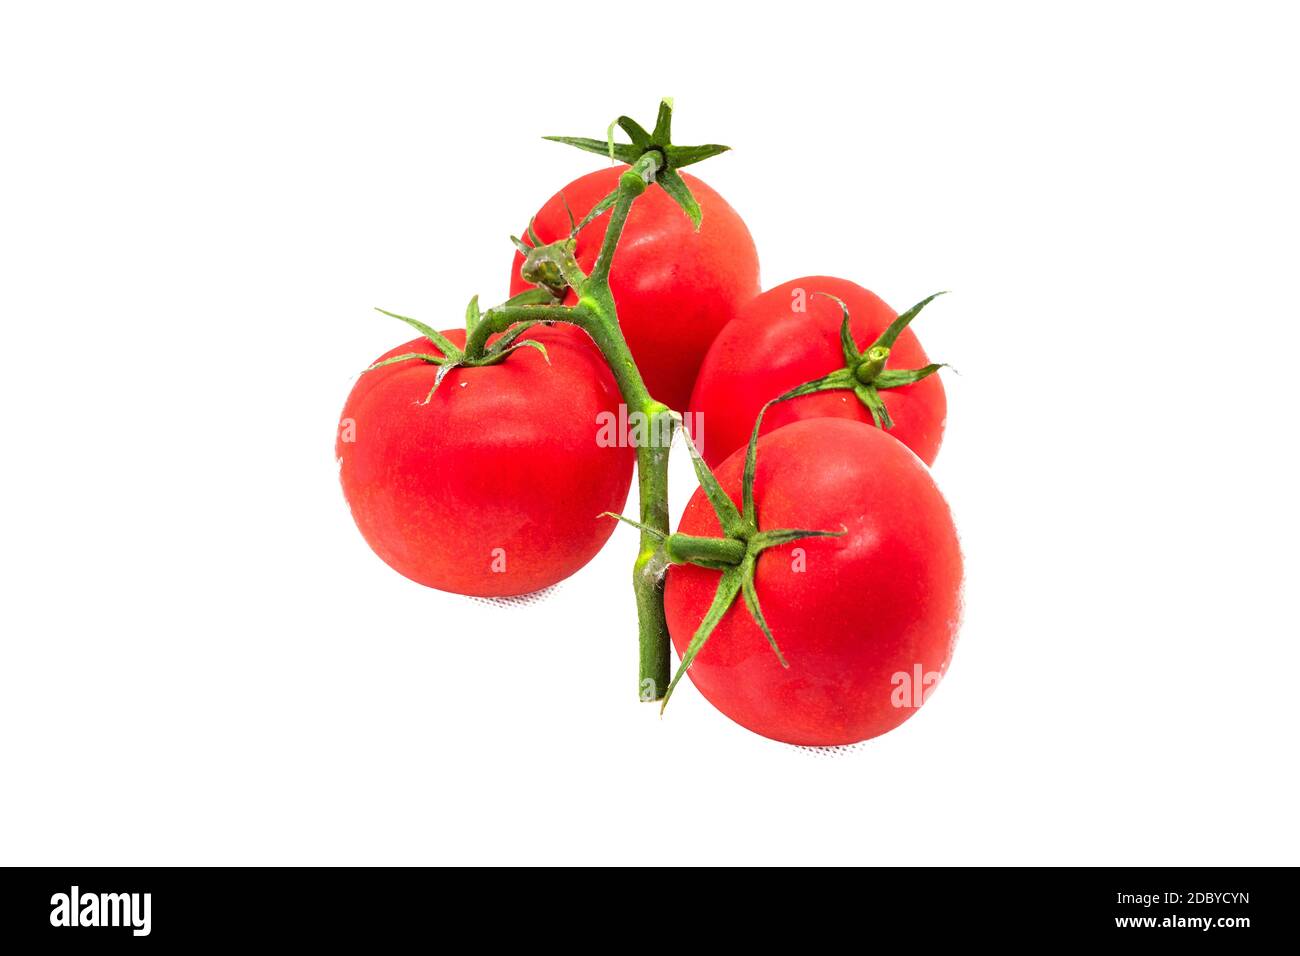 tasty fresh red tomatoes isolated on white background studioshot. Stock Photo